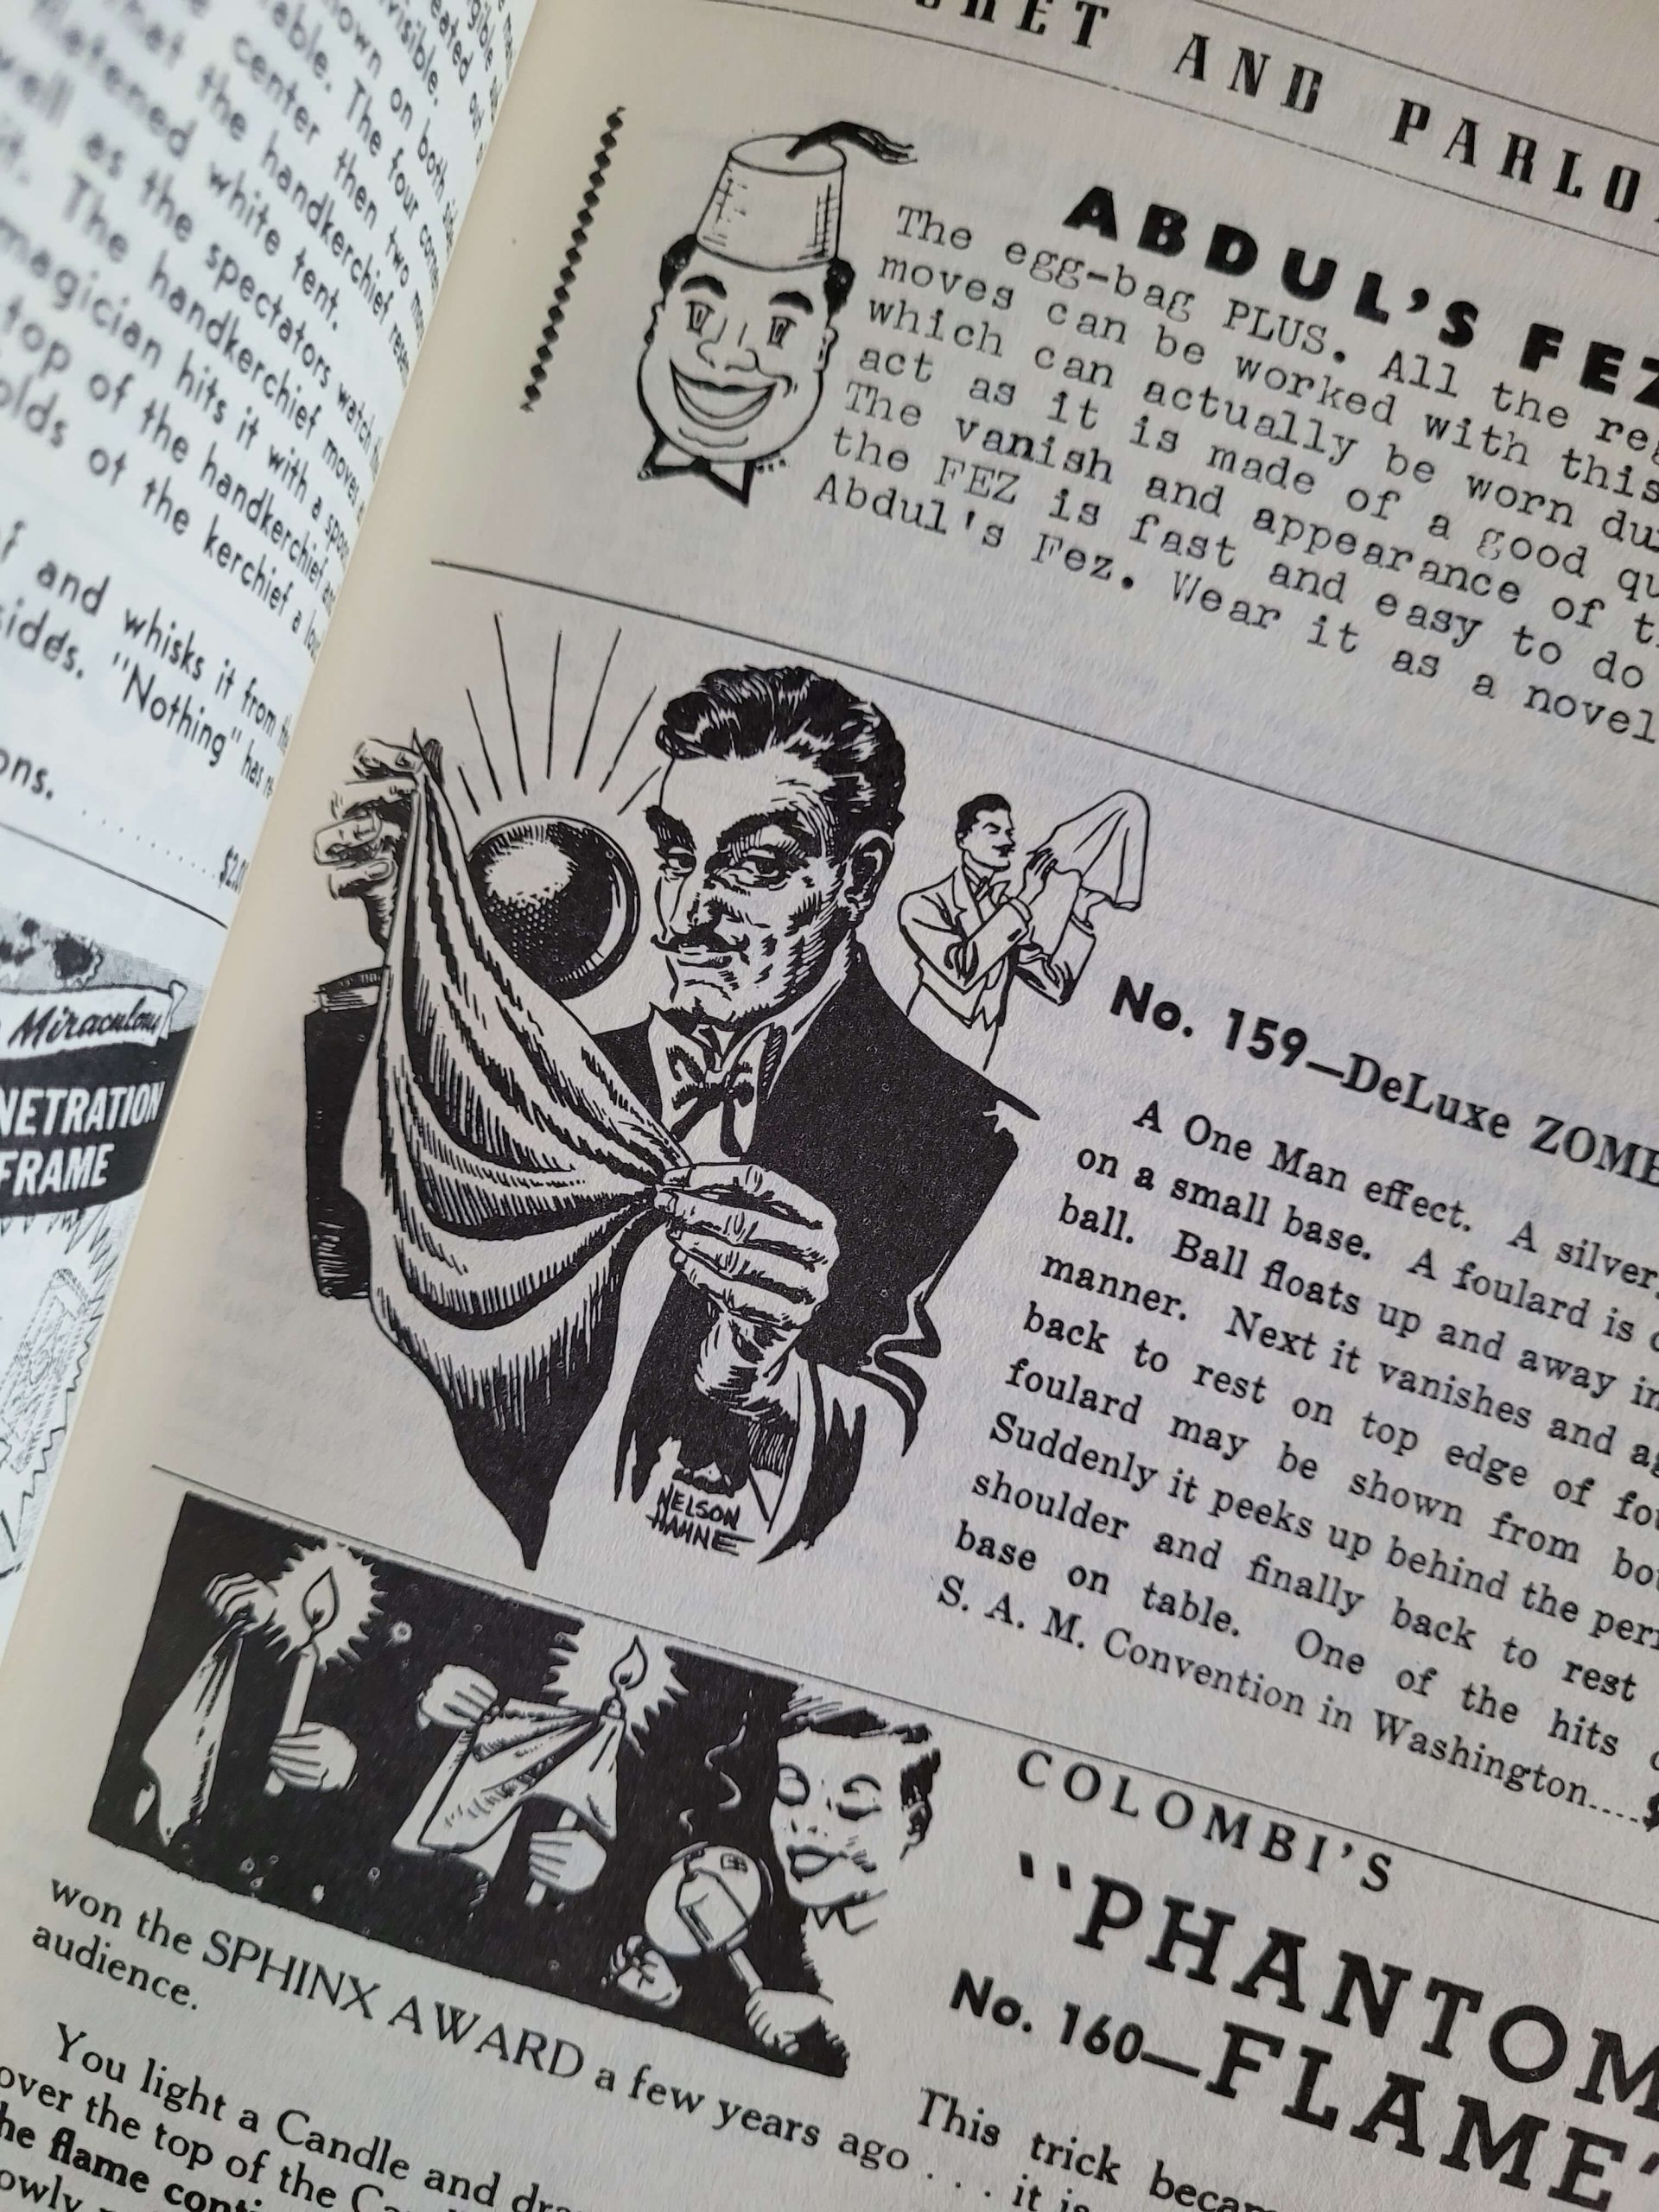 (1966) Louis Tannen magic catalog